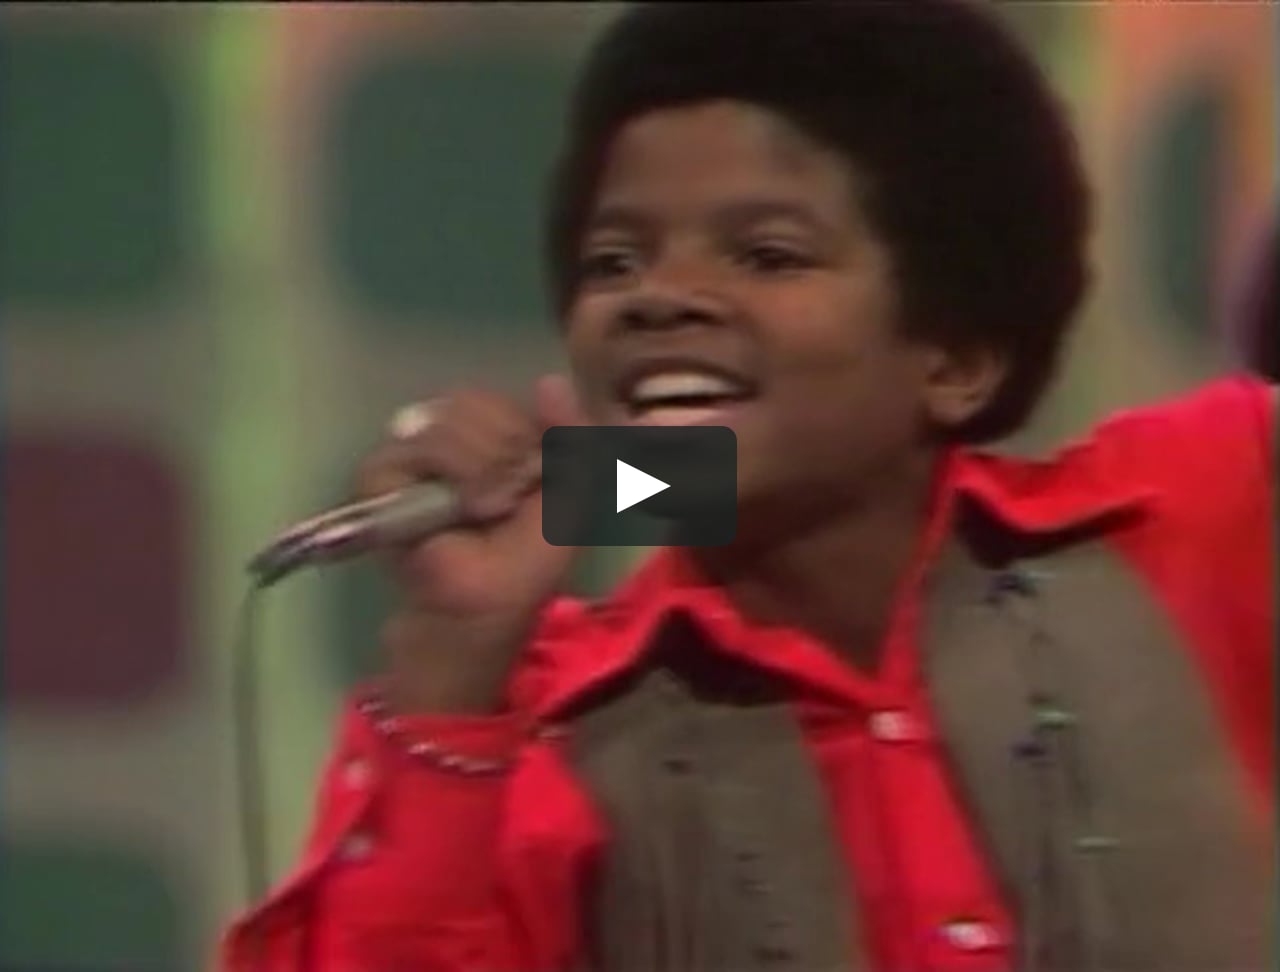 The Jackson 5 - 'I Want You Back' & 'ABC' Medley